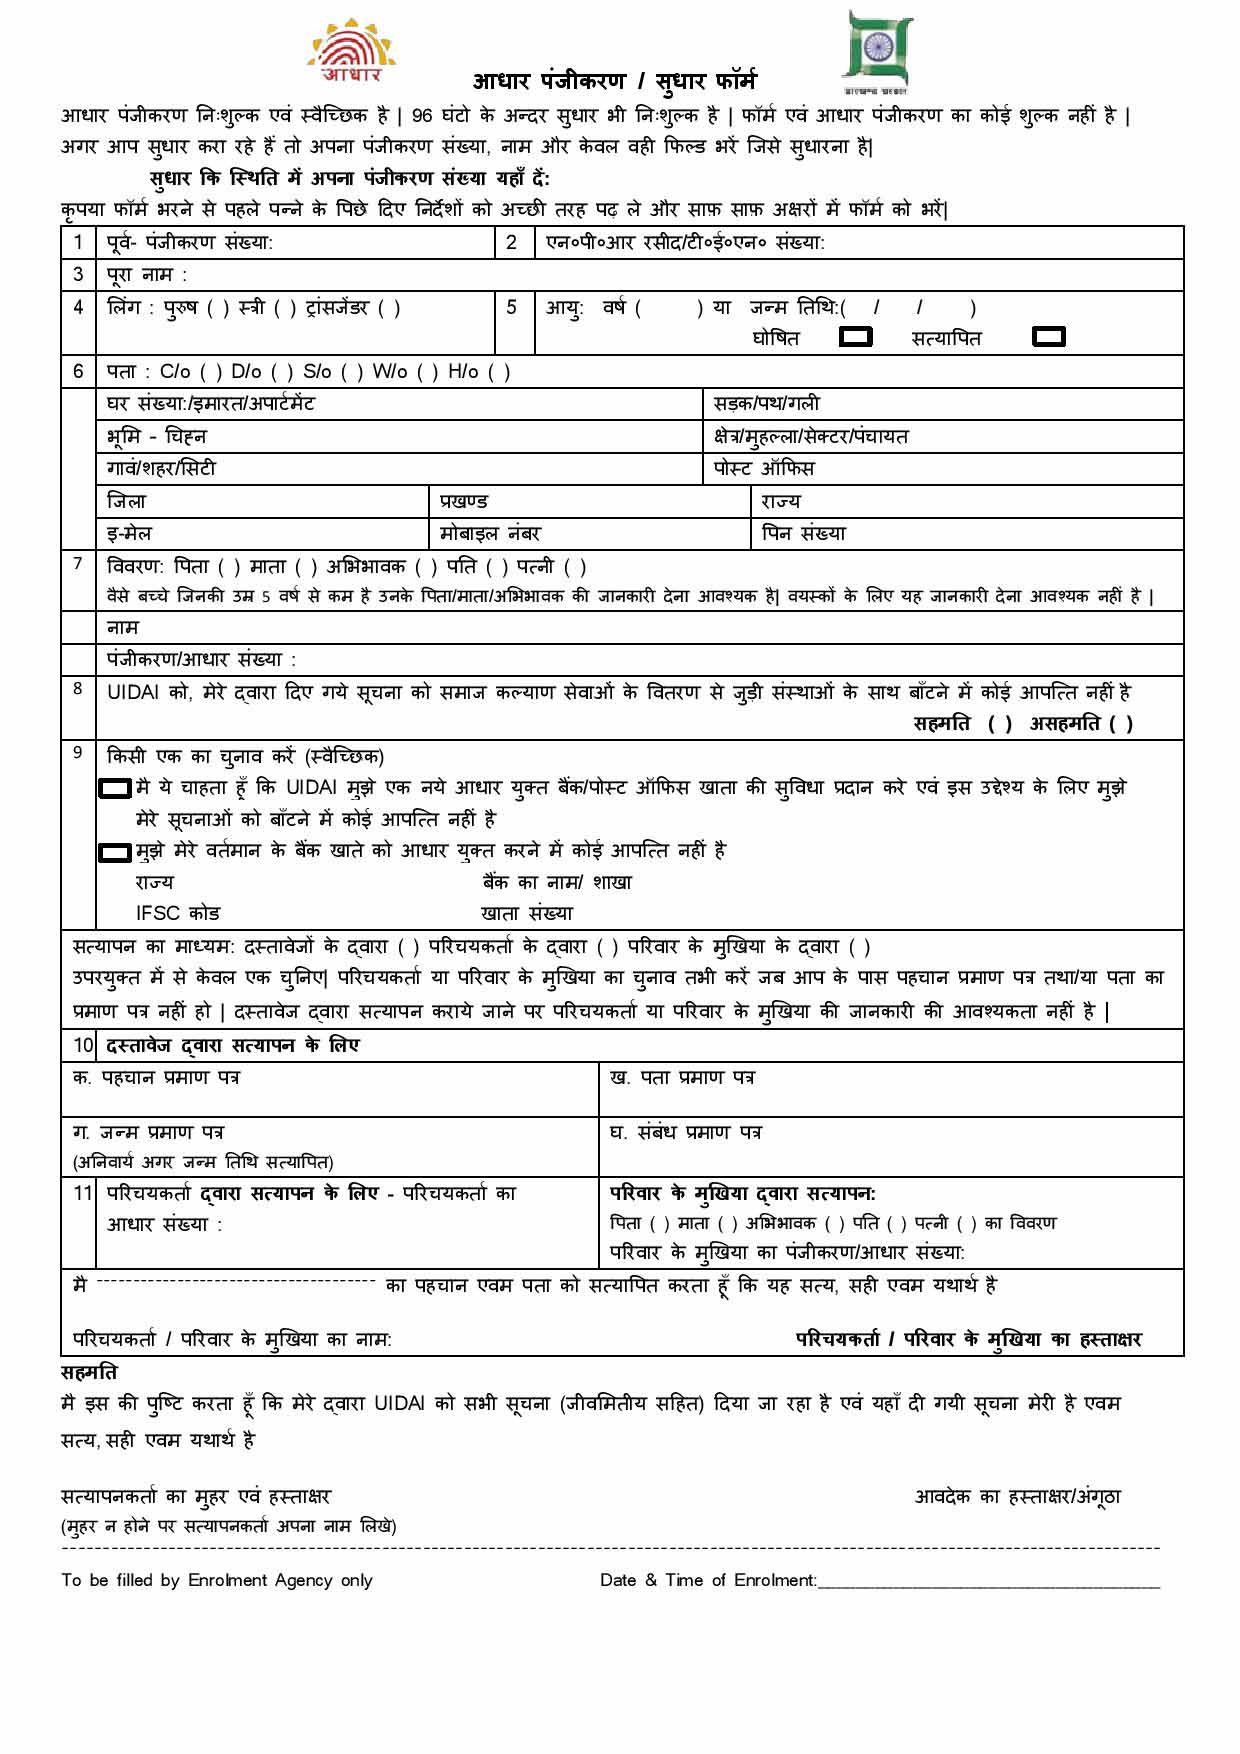 aadhar card application form free download pdf in hindi